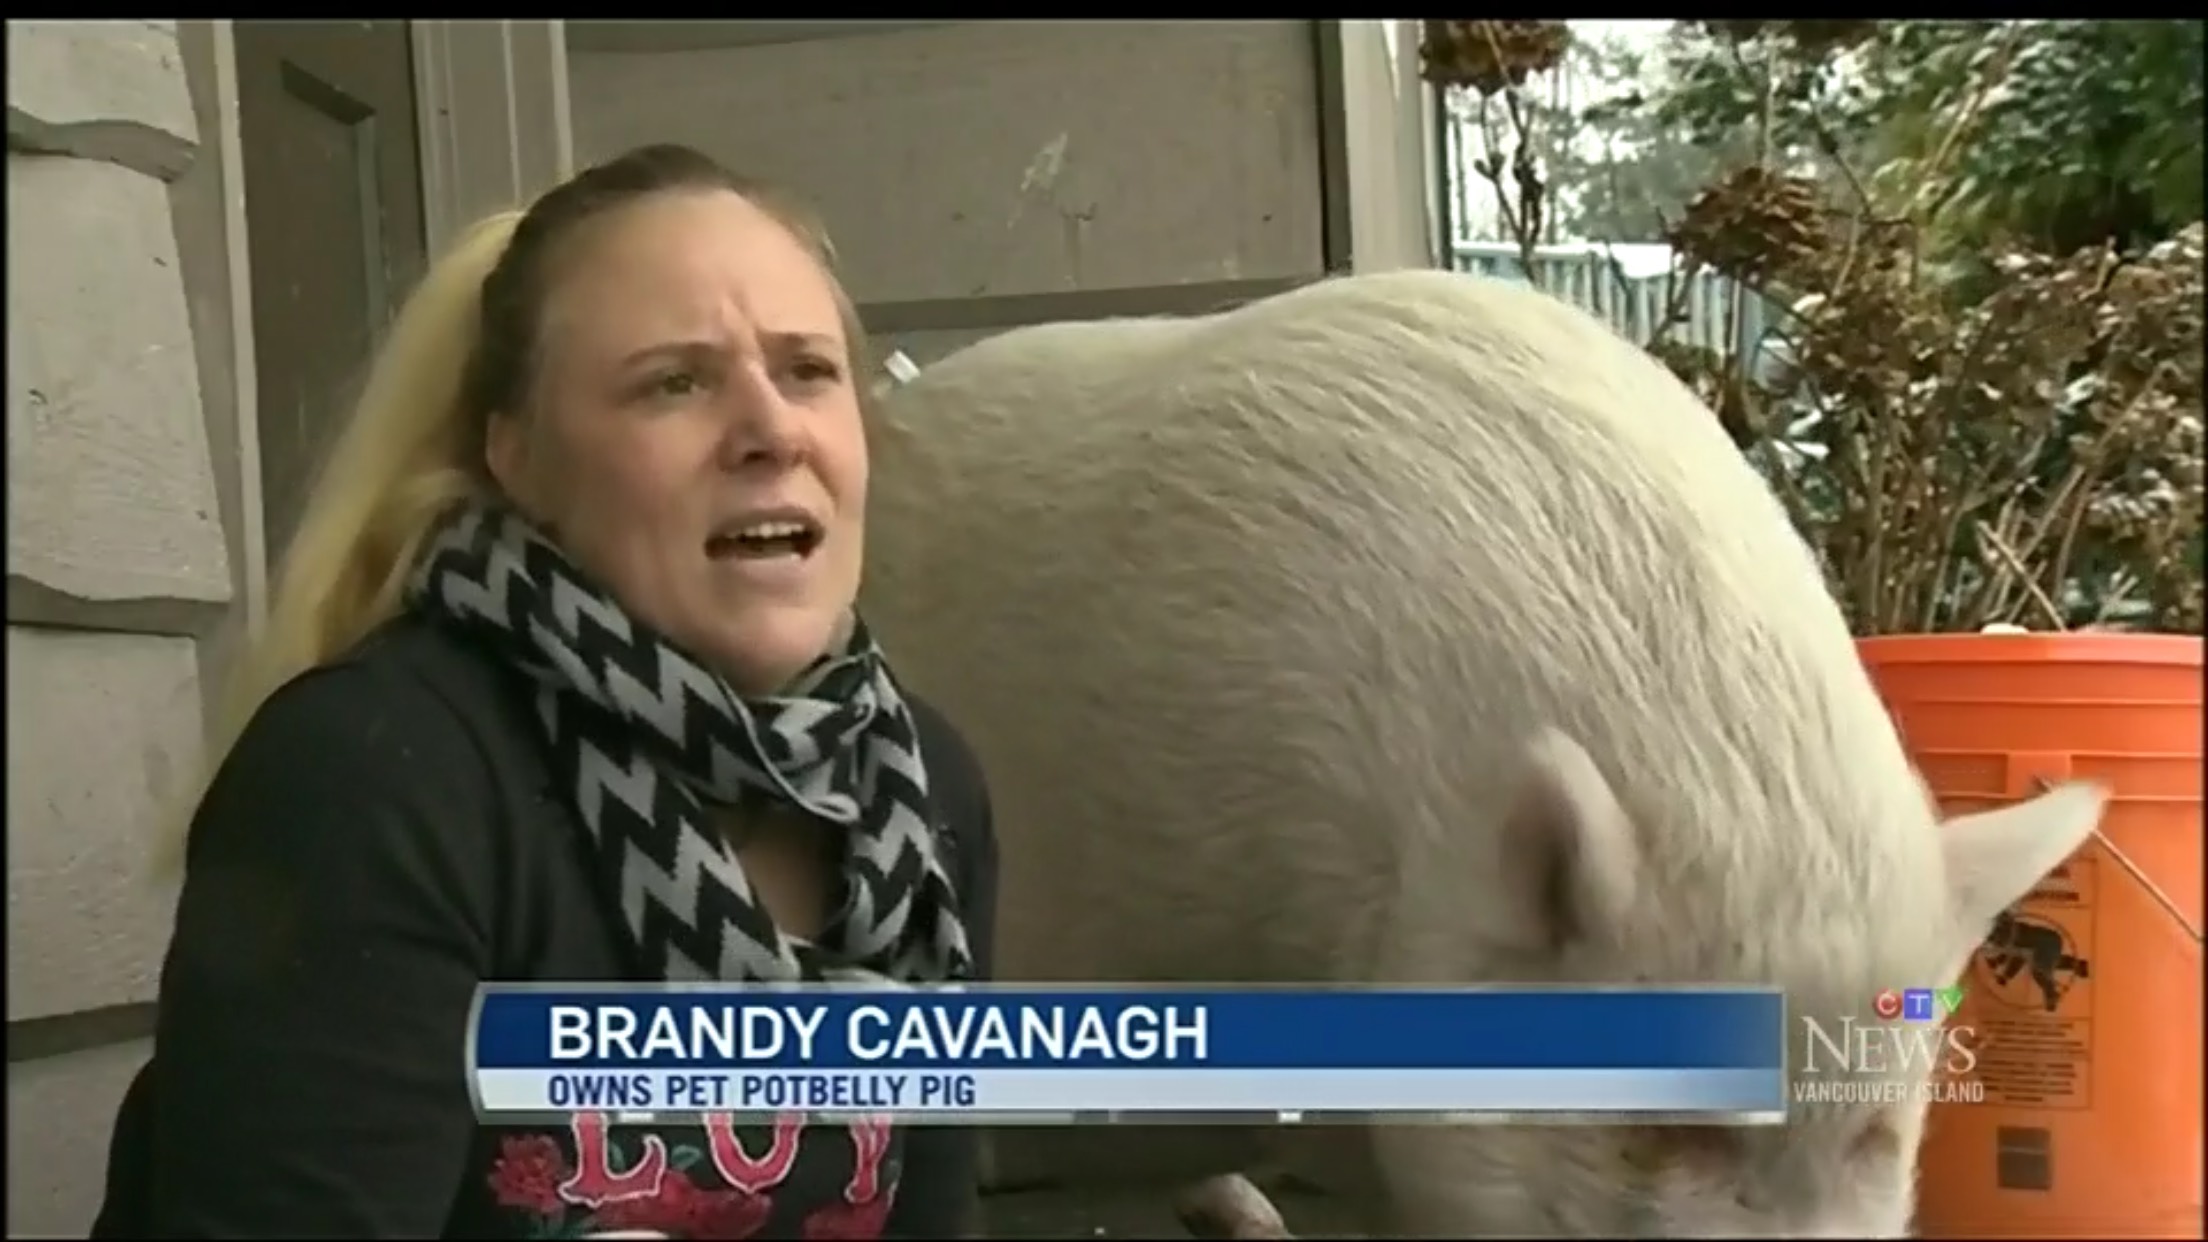 Brandy Cavanagh: Owns Pet Potbelly Pig